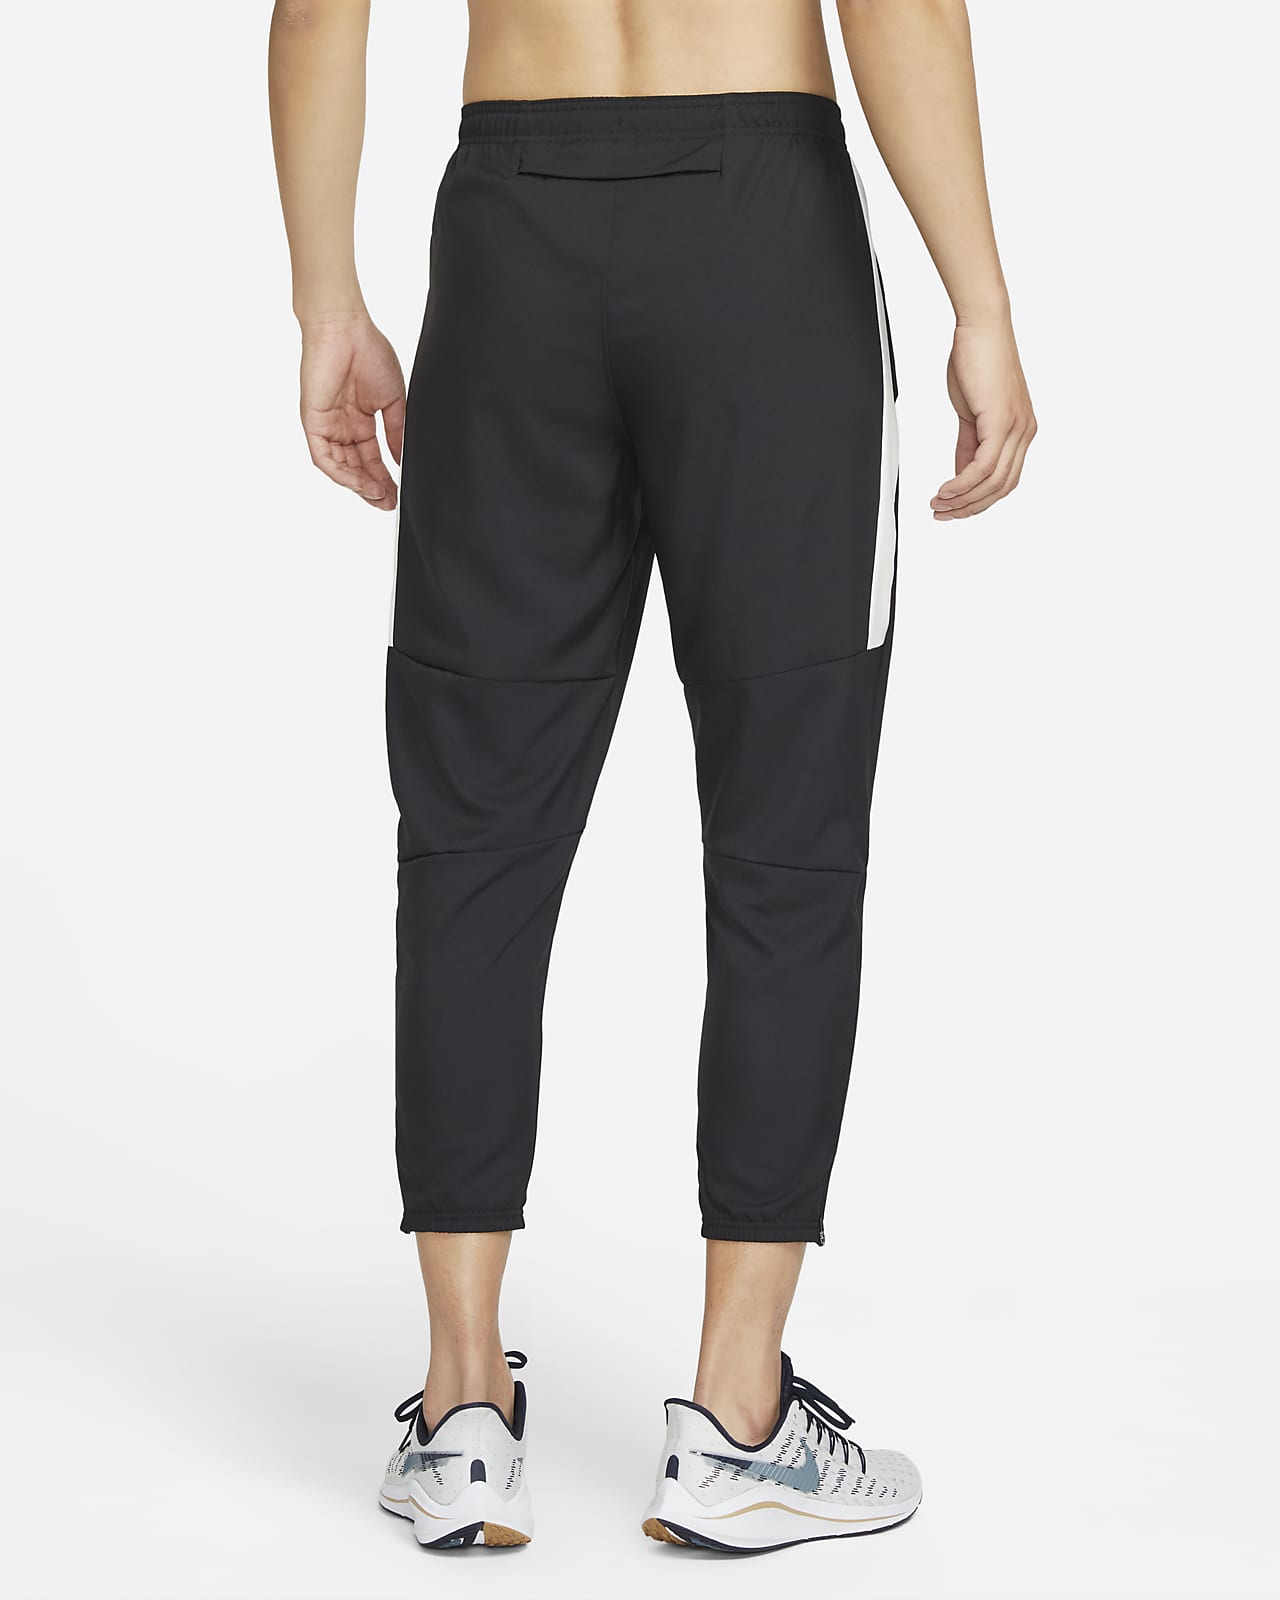 Lycra Nike Dri Fit Track Pants Solid